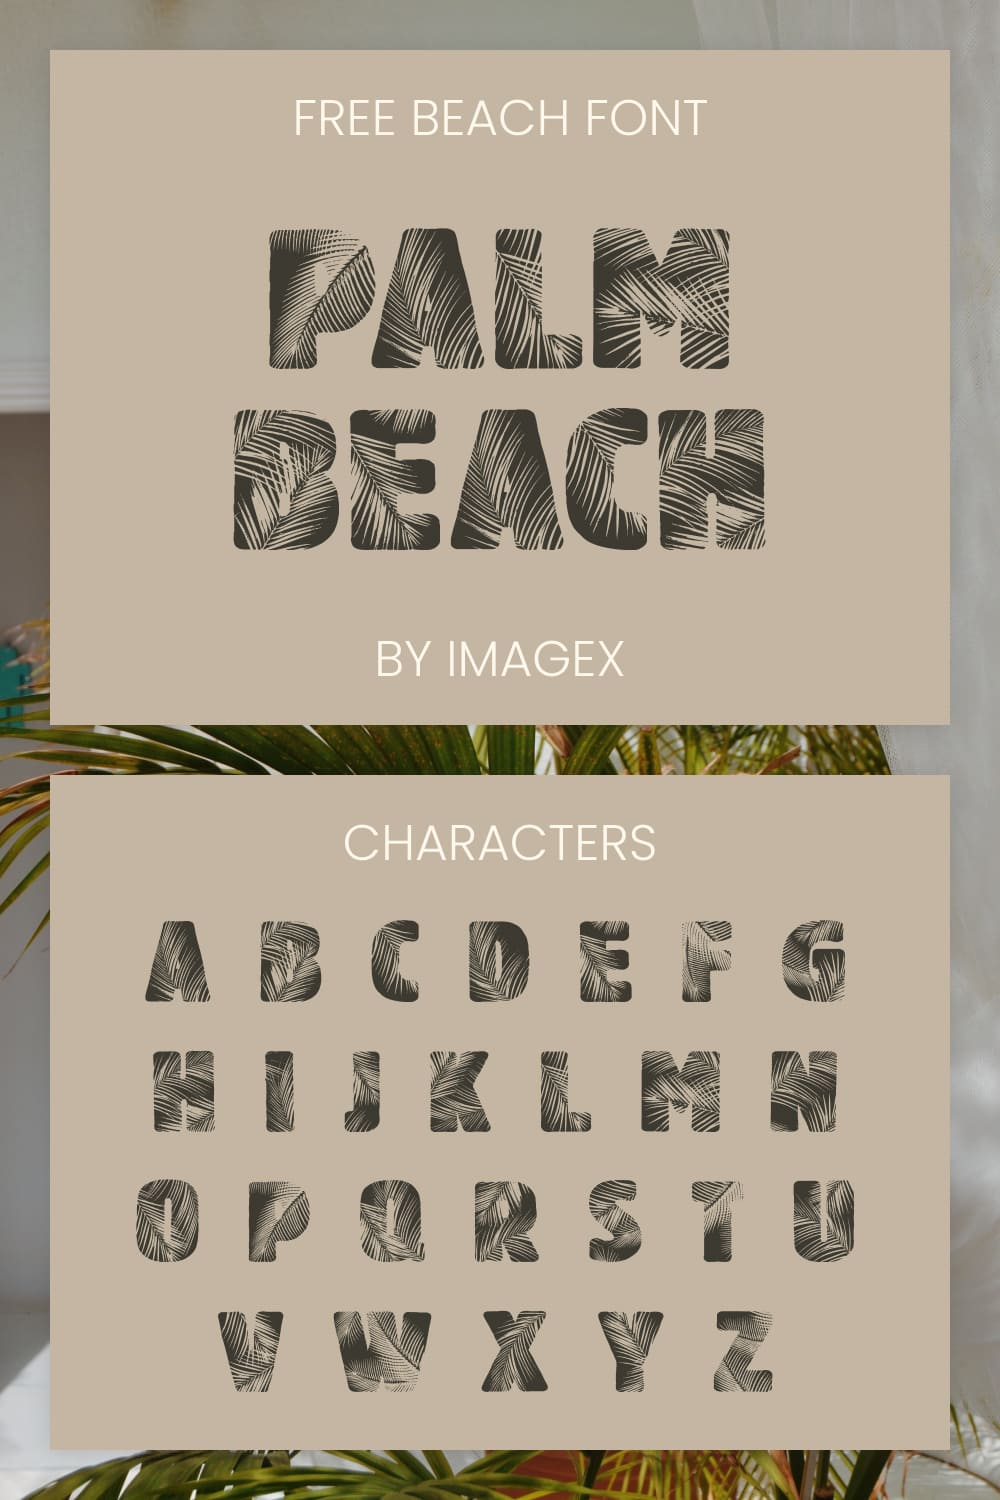 Palm Beach - free beach font charachters Pinterest preview by MasterBundles.